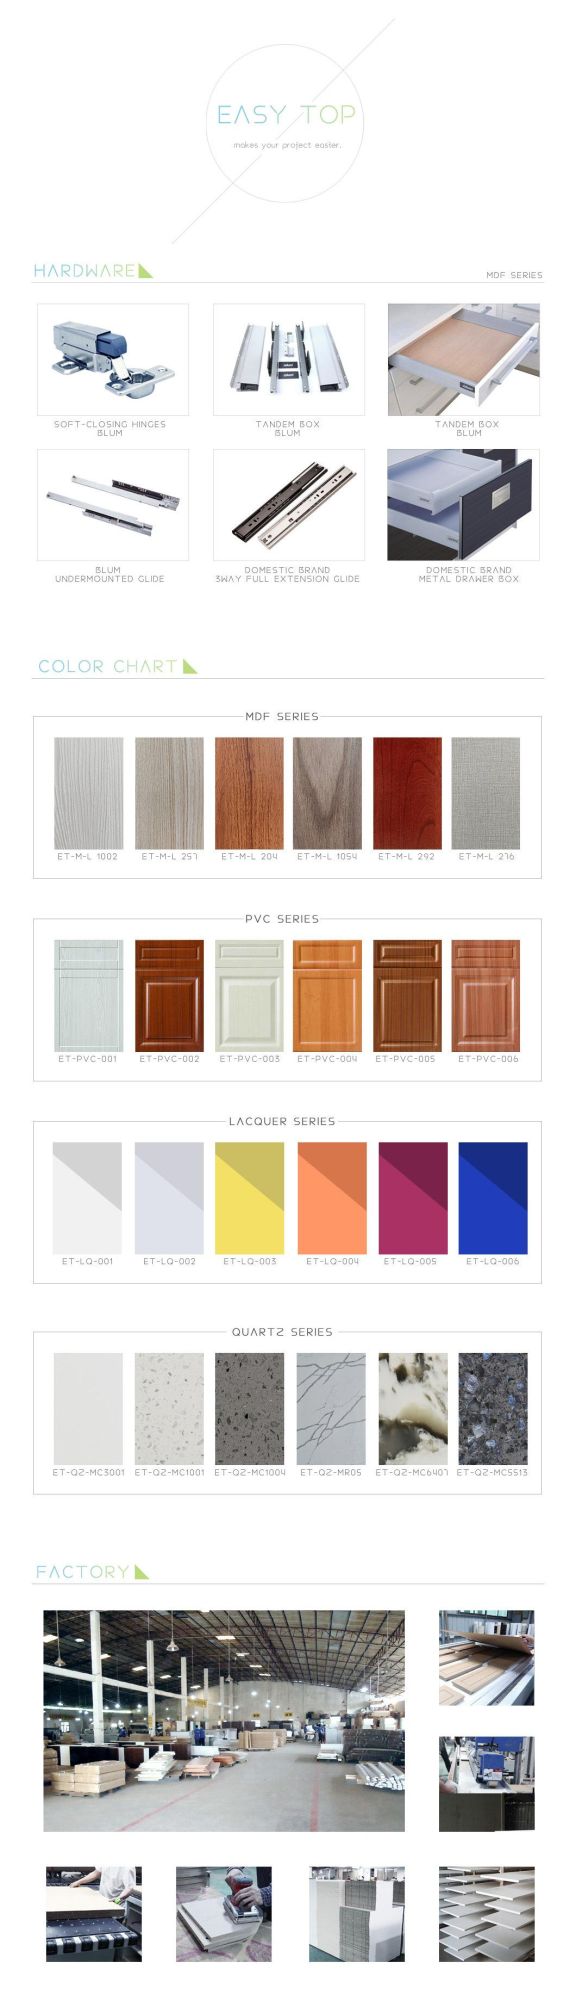 Hotel Apartment Kitchen European Standard Wood Tones PVC Kitchen Cabinets